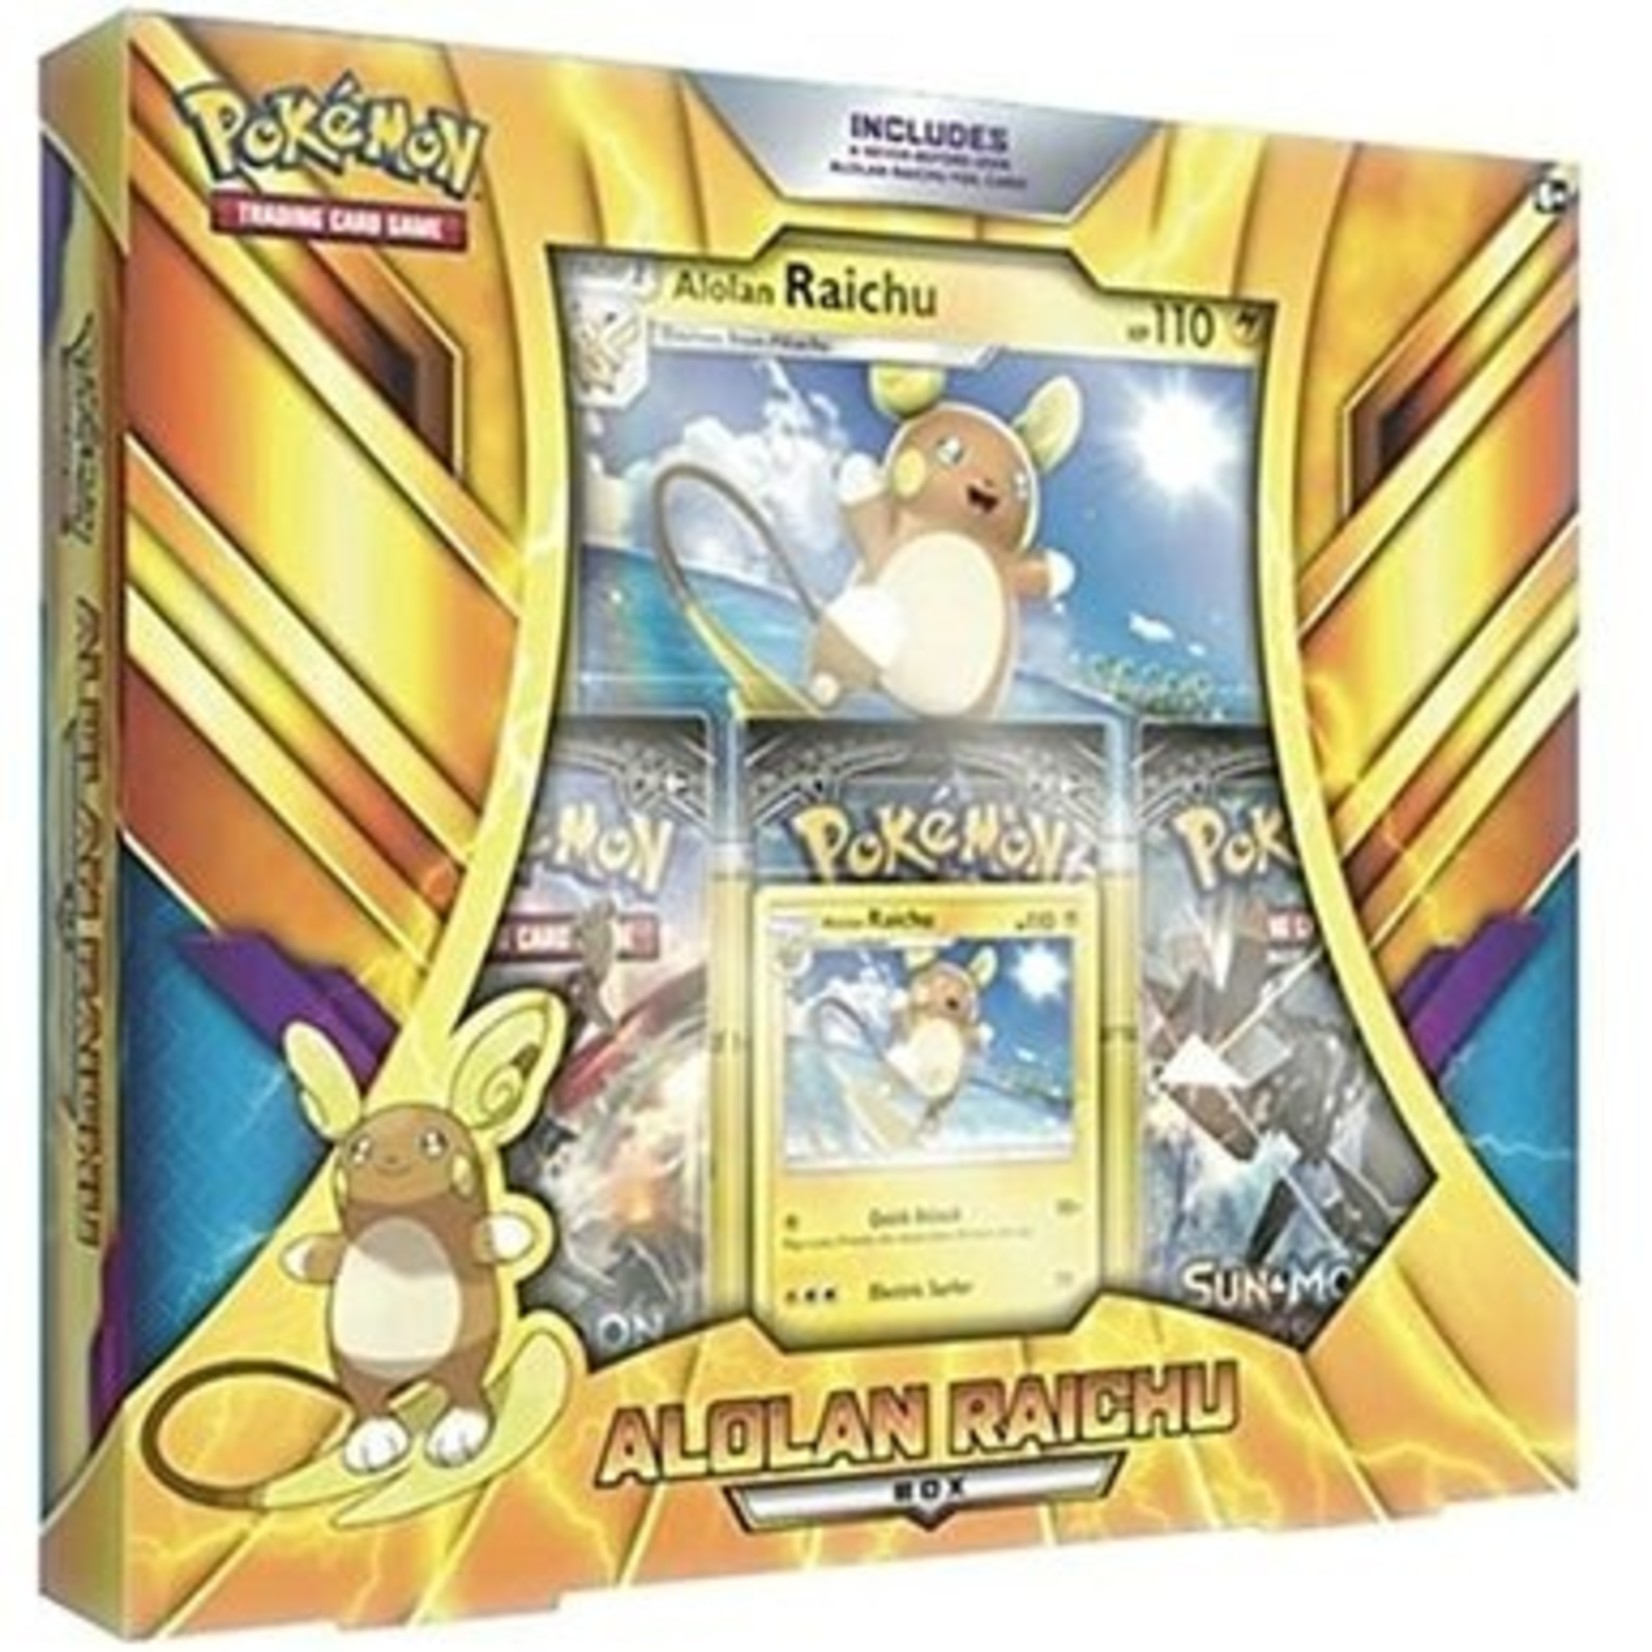 Pokémon Pokémon Alolan Raichu Box